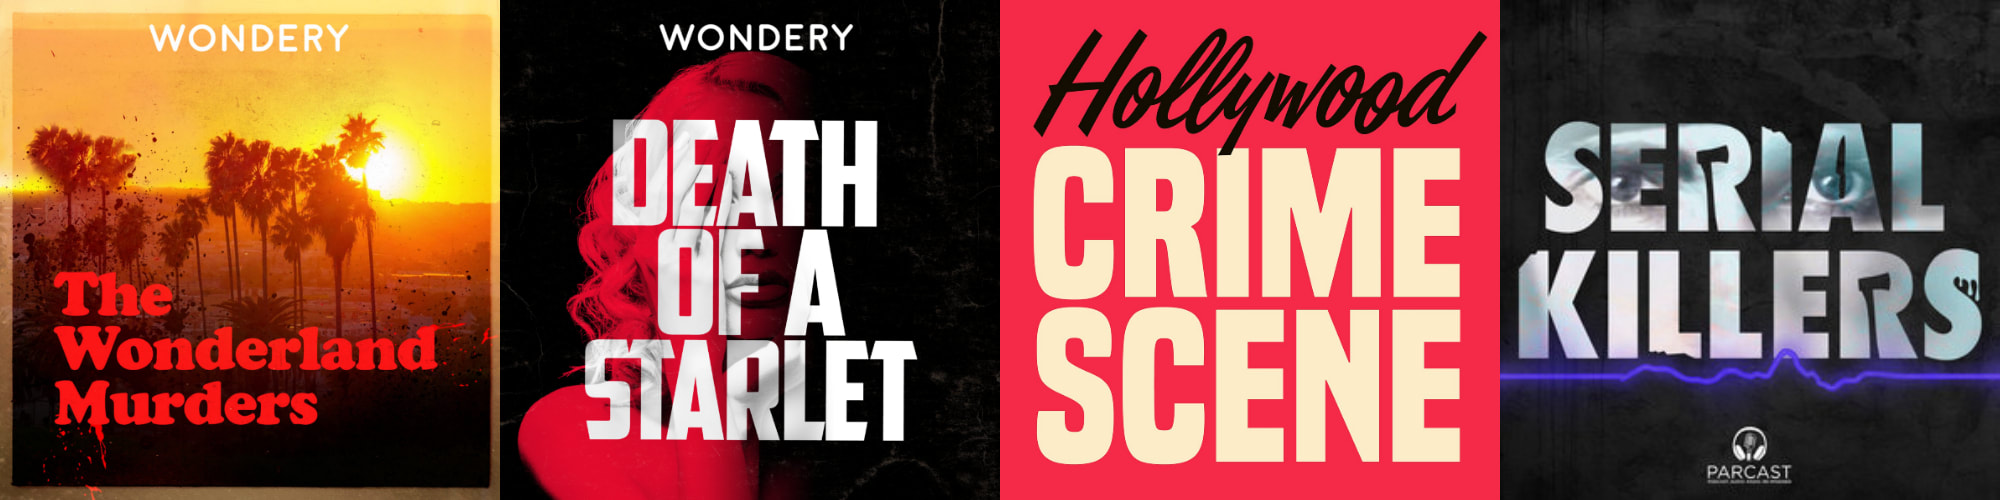 The Wonderland Murders, Death of a Starlet, Hollywood Crime Scene, Serial Killers